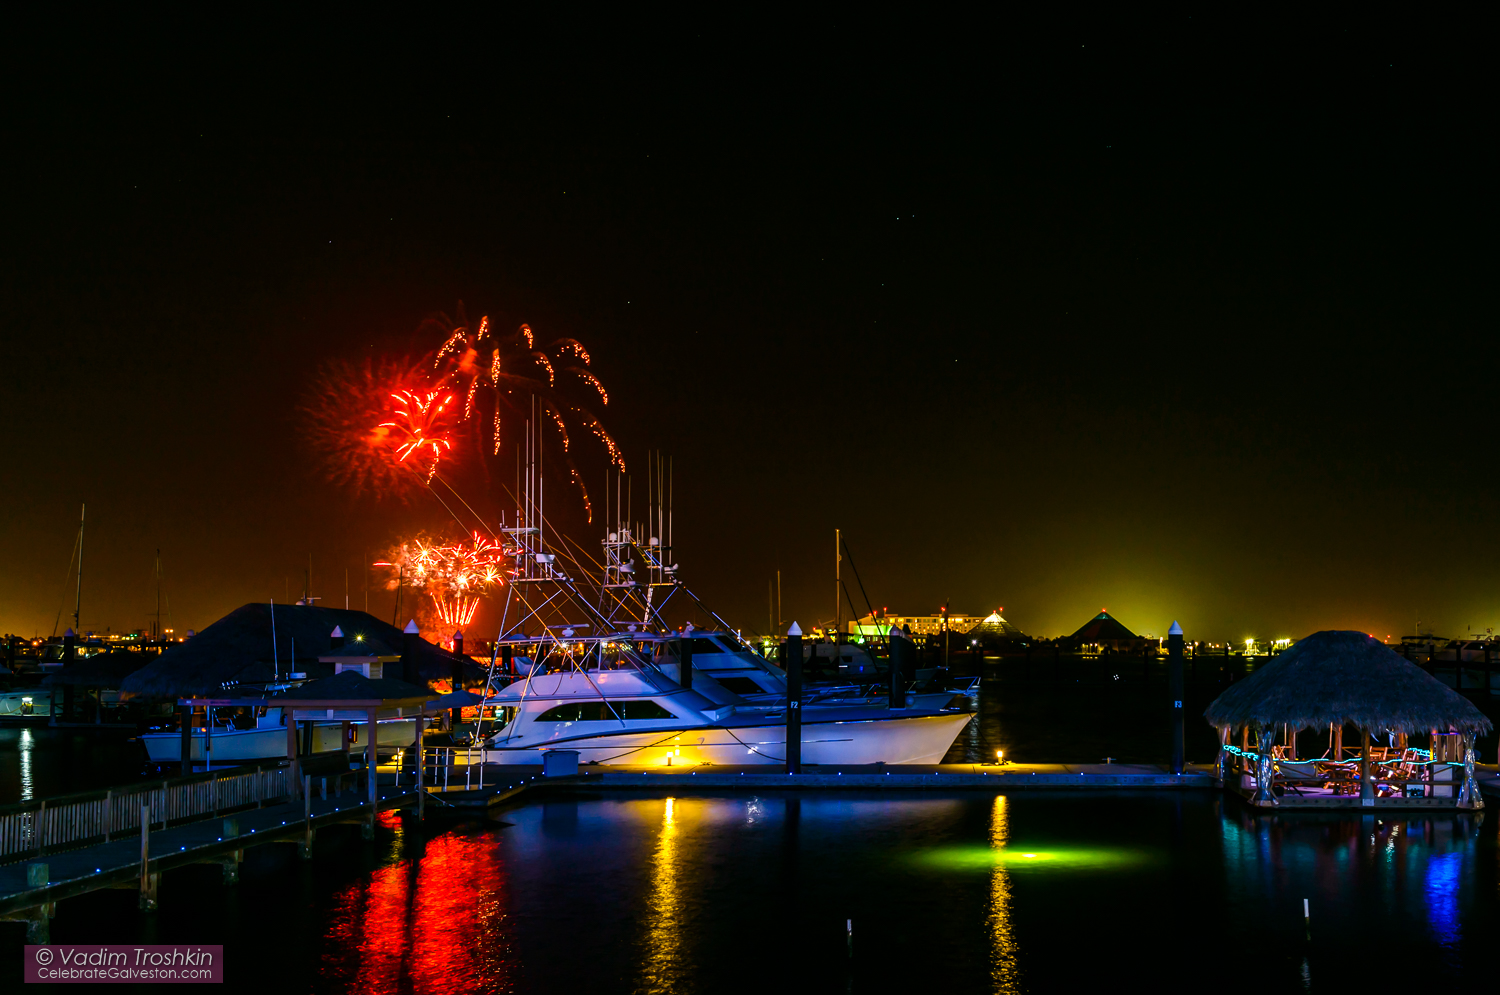 July 10, 2015. #Galveston Fireworks 